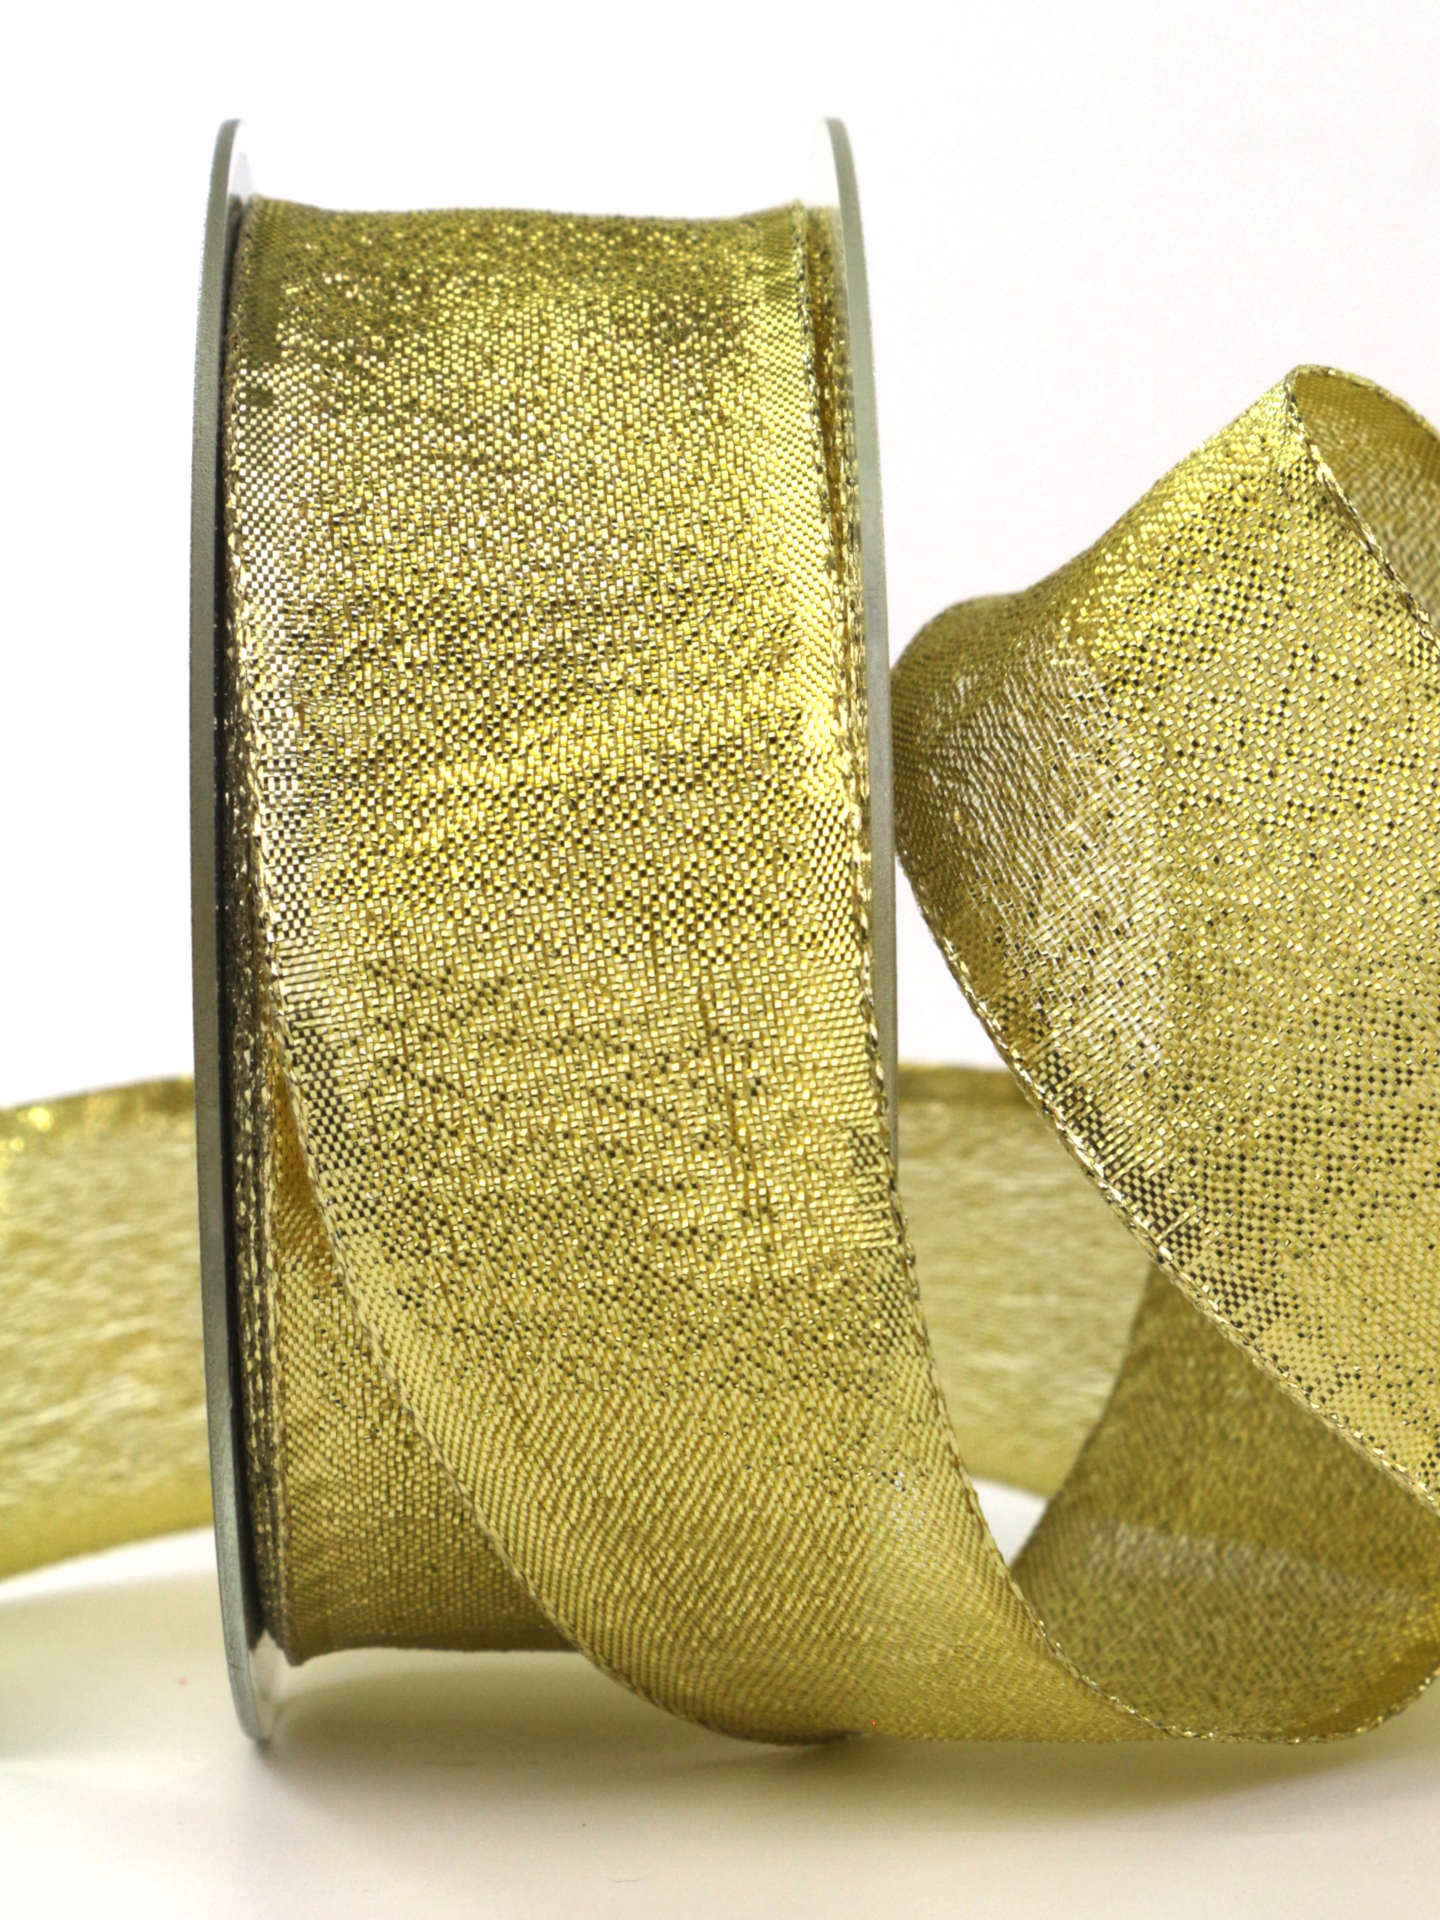 Goldband „Brokat“, gold, 40 mm breit, 25 m Rolle - weihnachtsbaender, weihnachtsband, geschenkband-weihnachten-dauersortiment, geschenkband-weihnachten